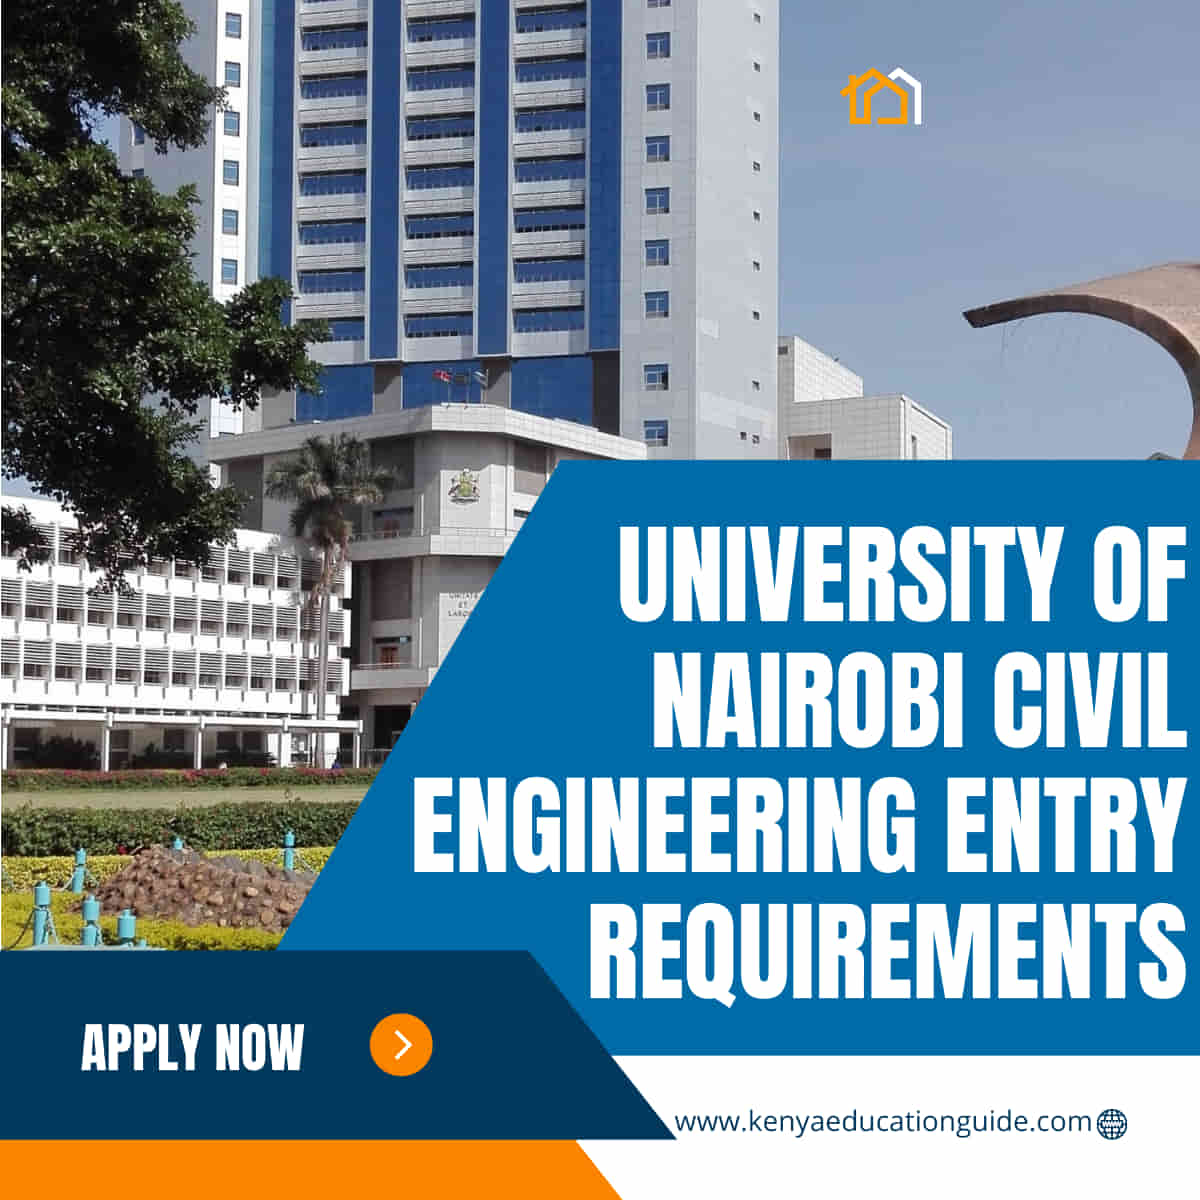 University of Nairobi civil engineering entry requirements